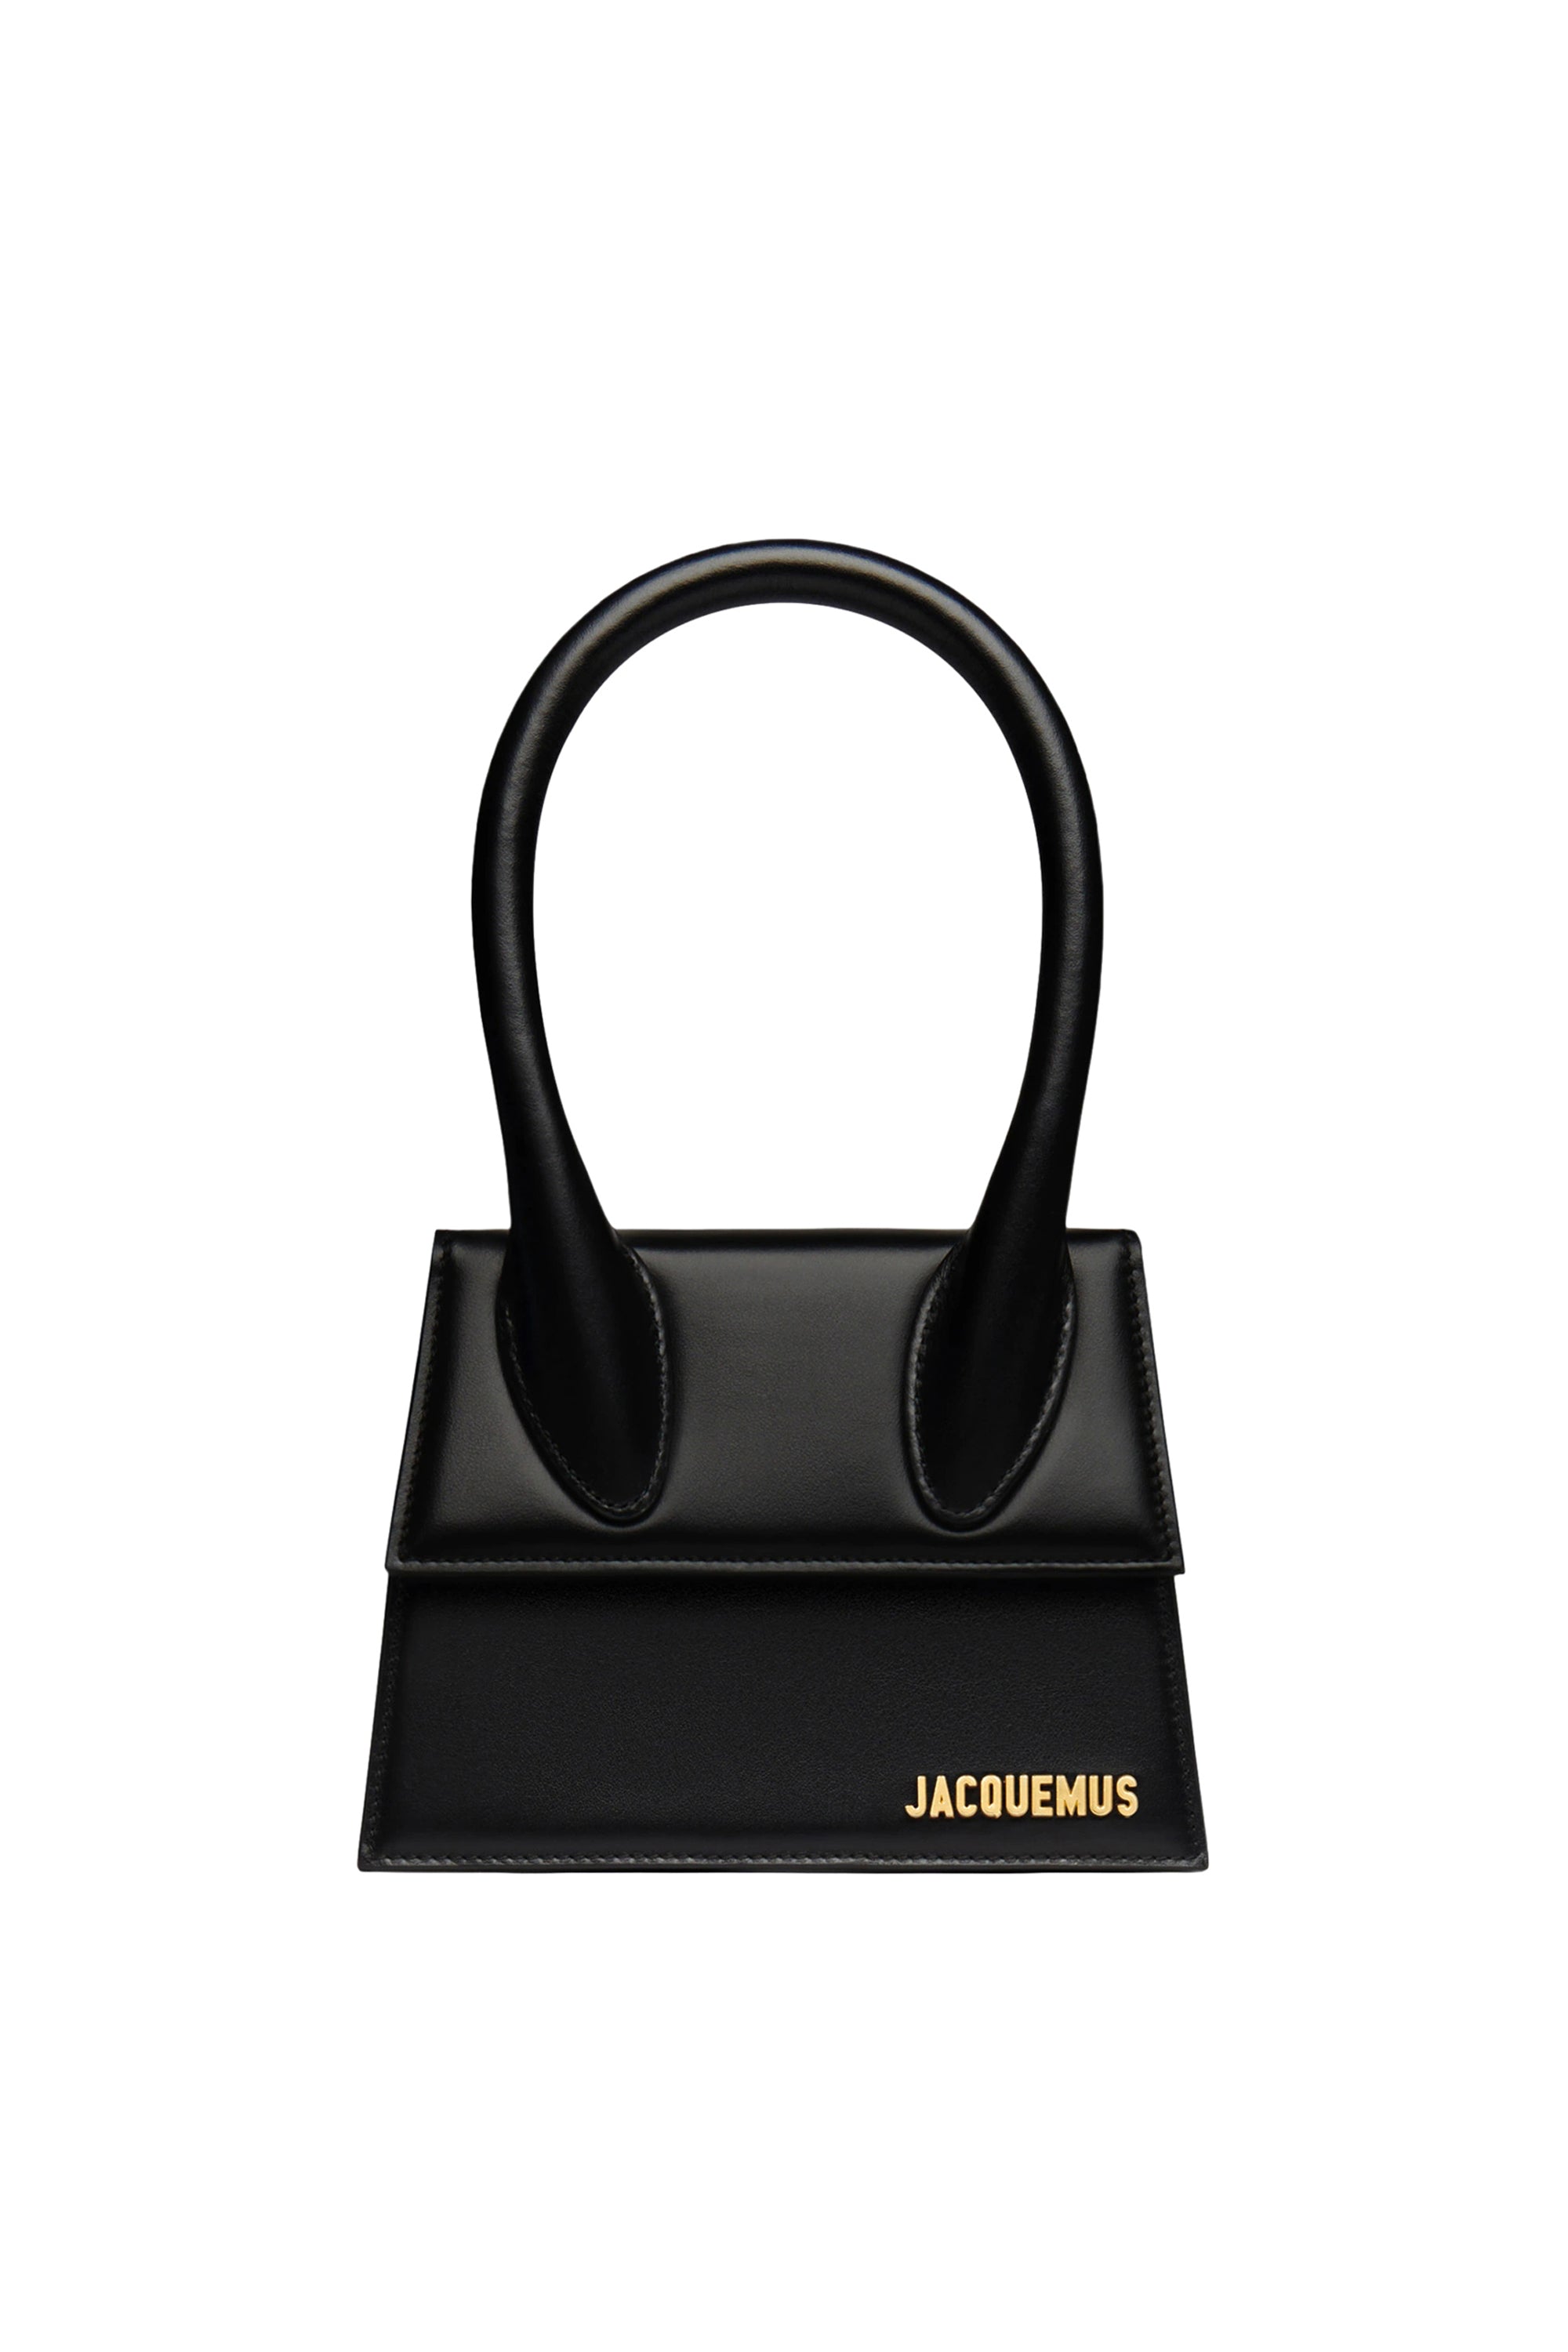 Jacquemus Le Chiquito Black Bag